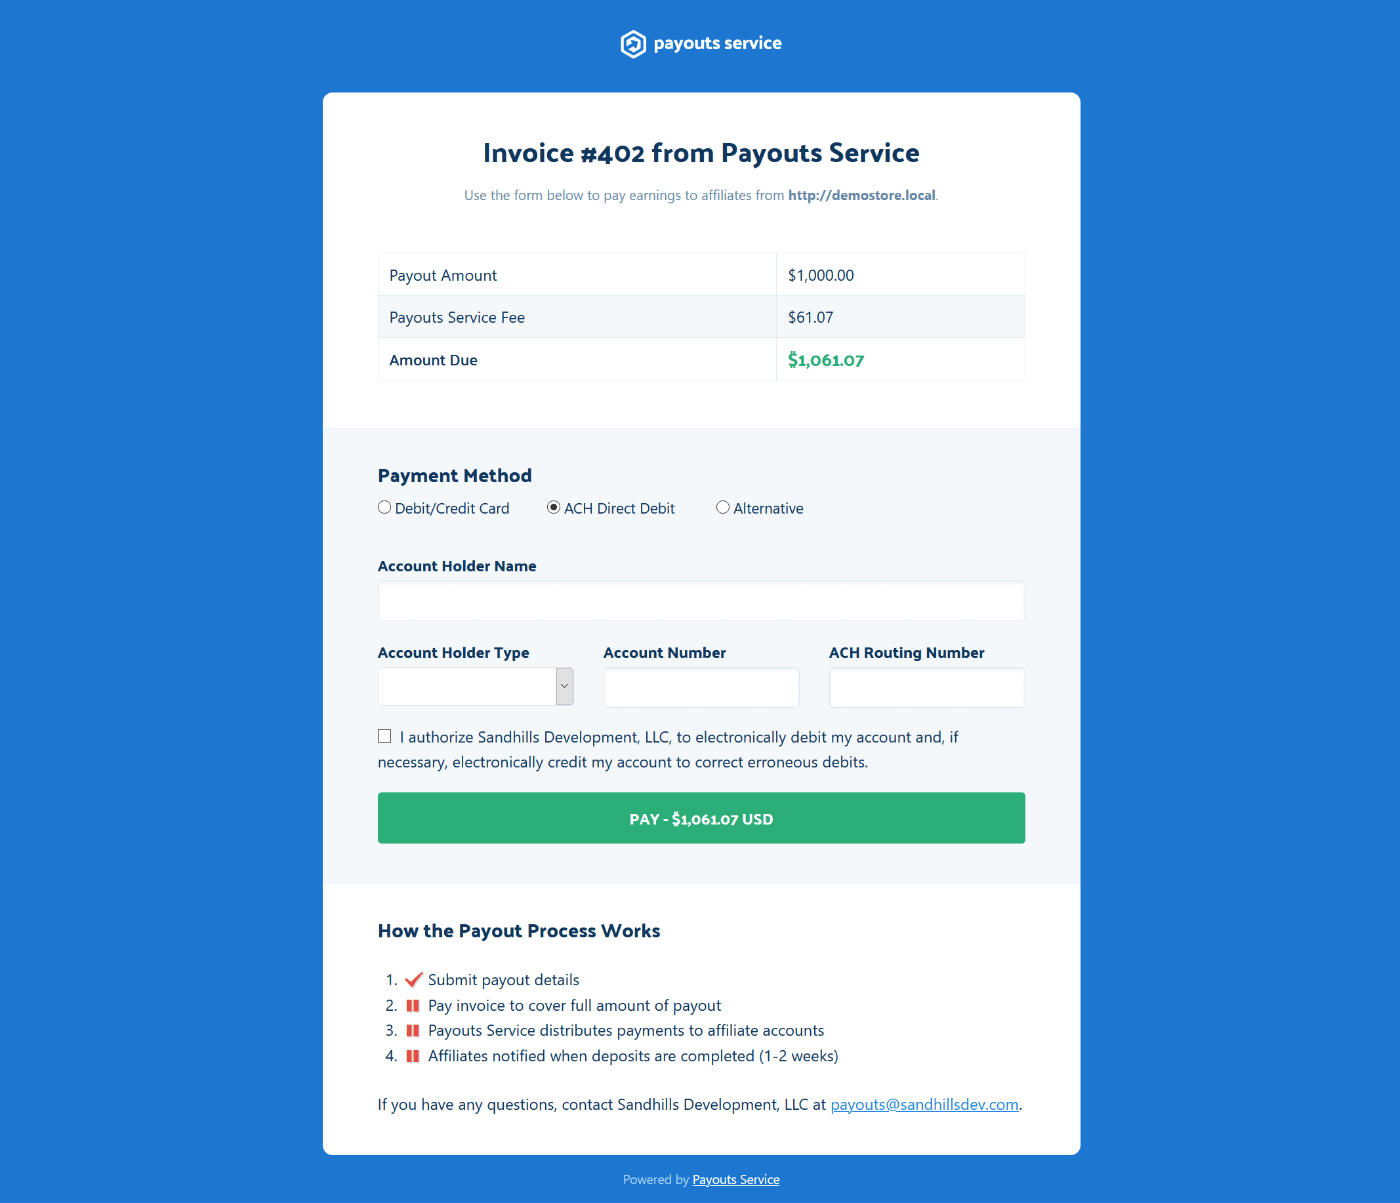 Screenshot - Payouts Service invoice